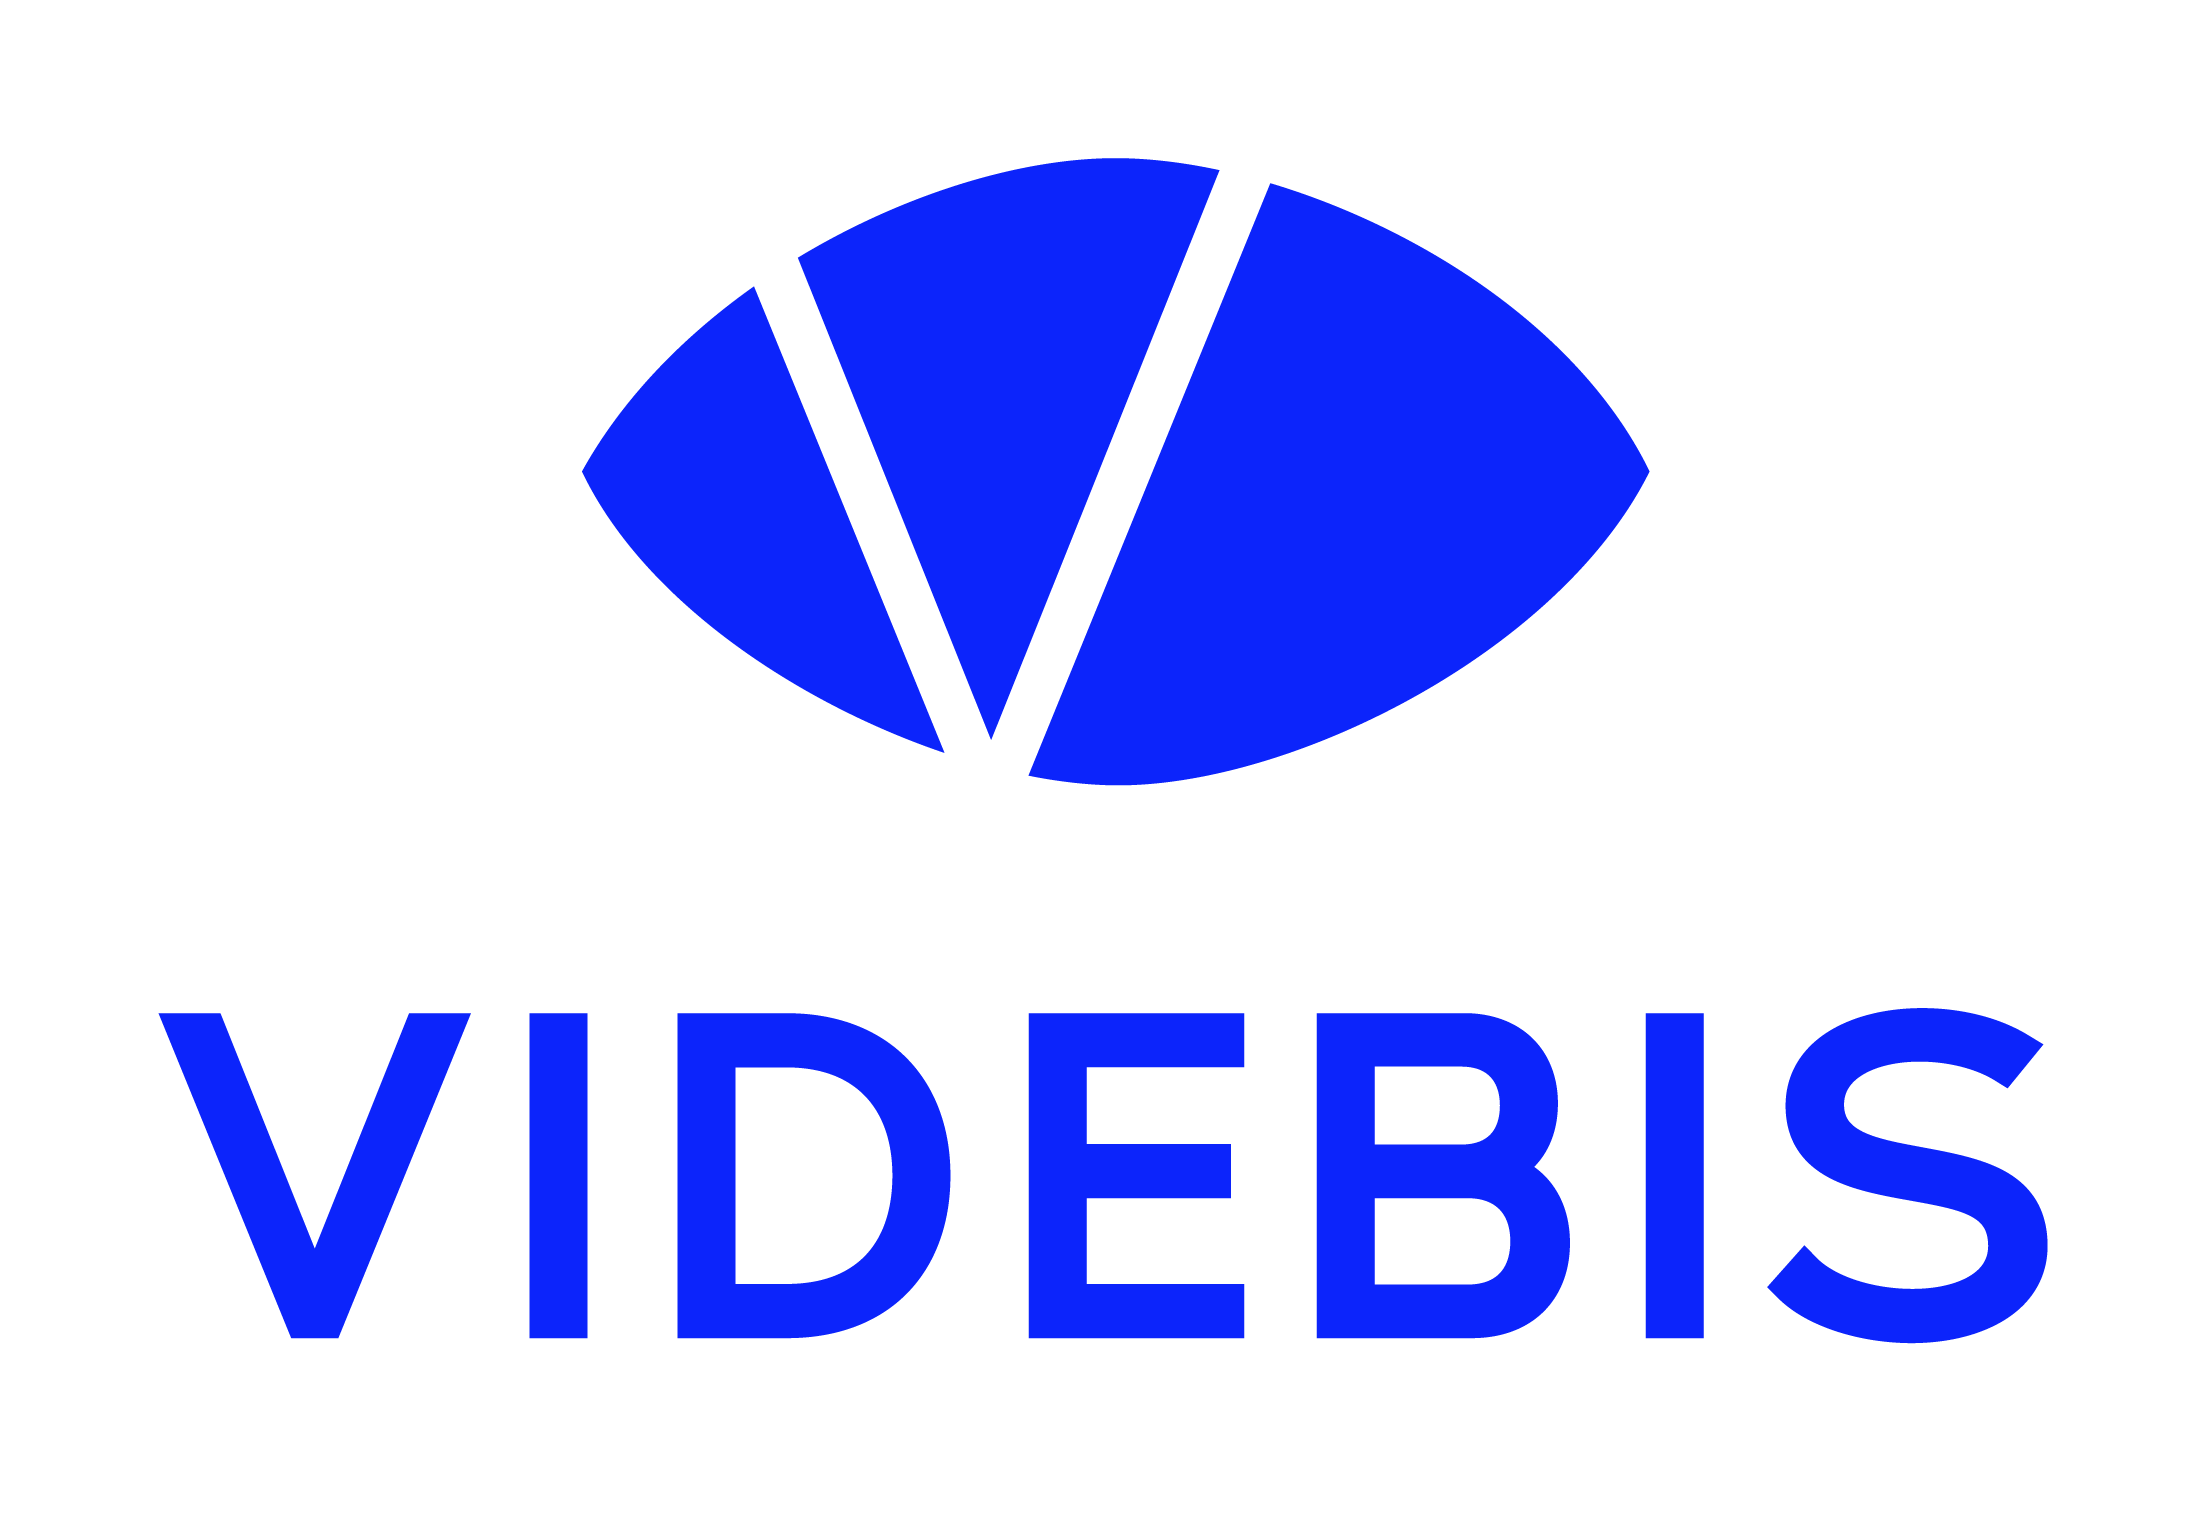 VIDEBIS Logo Auge in Königsblau